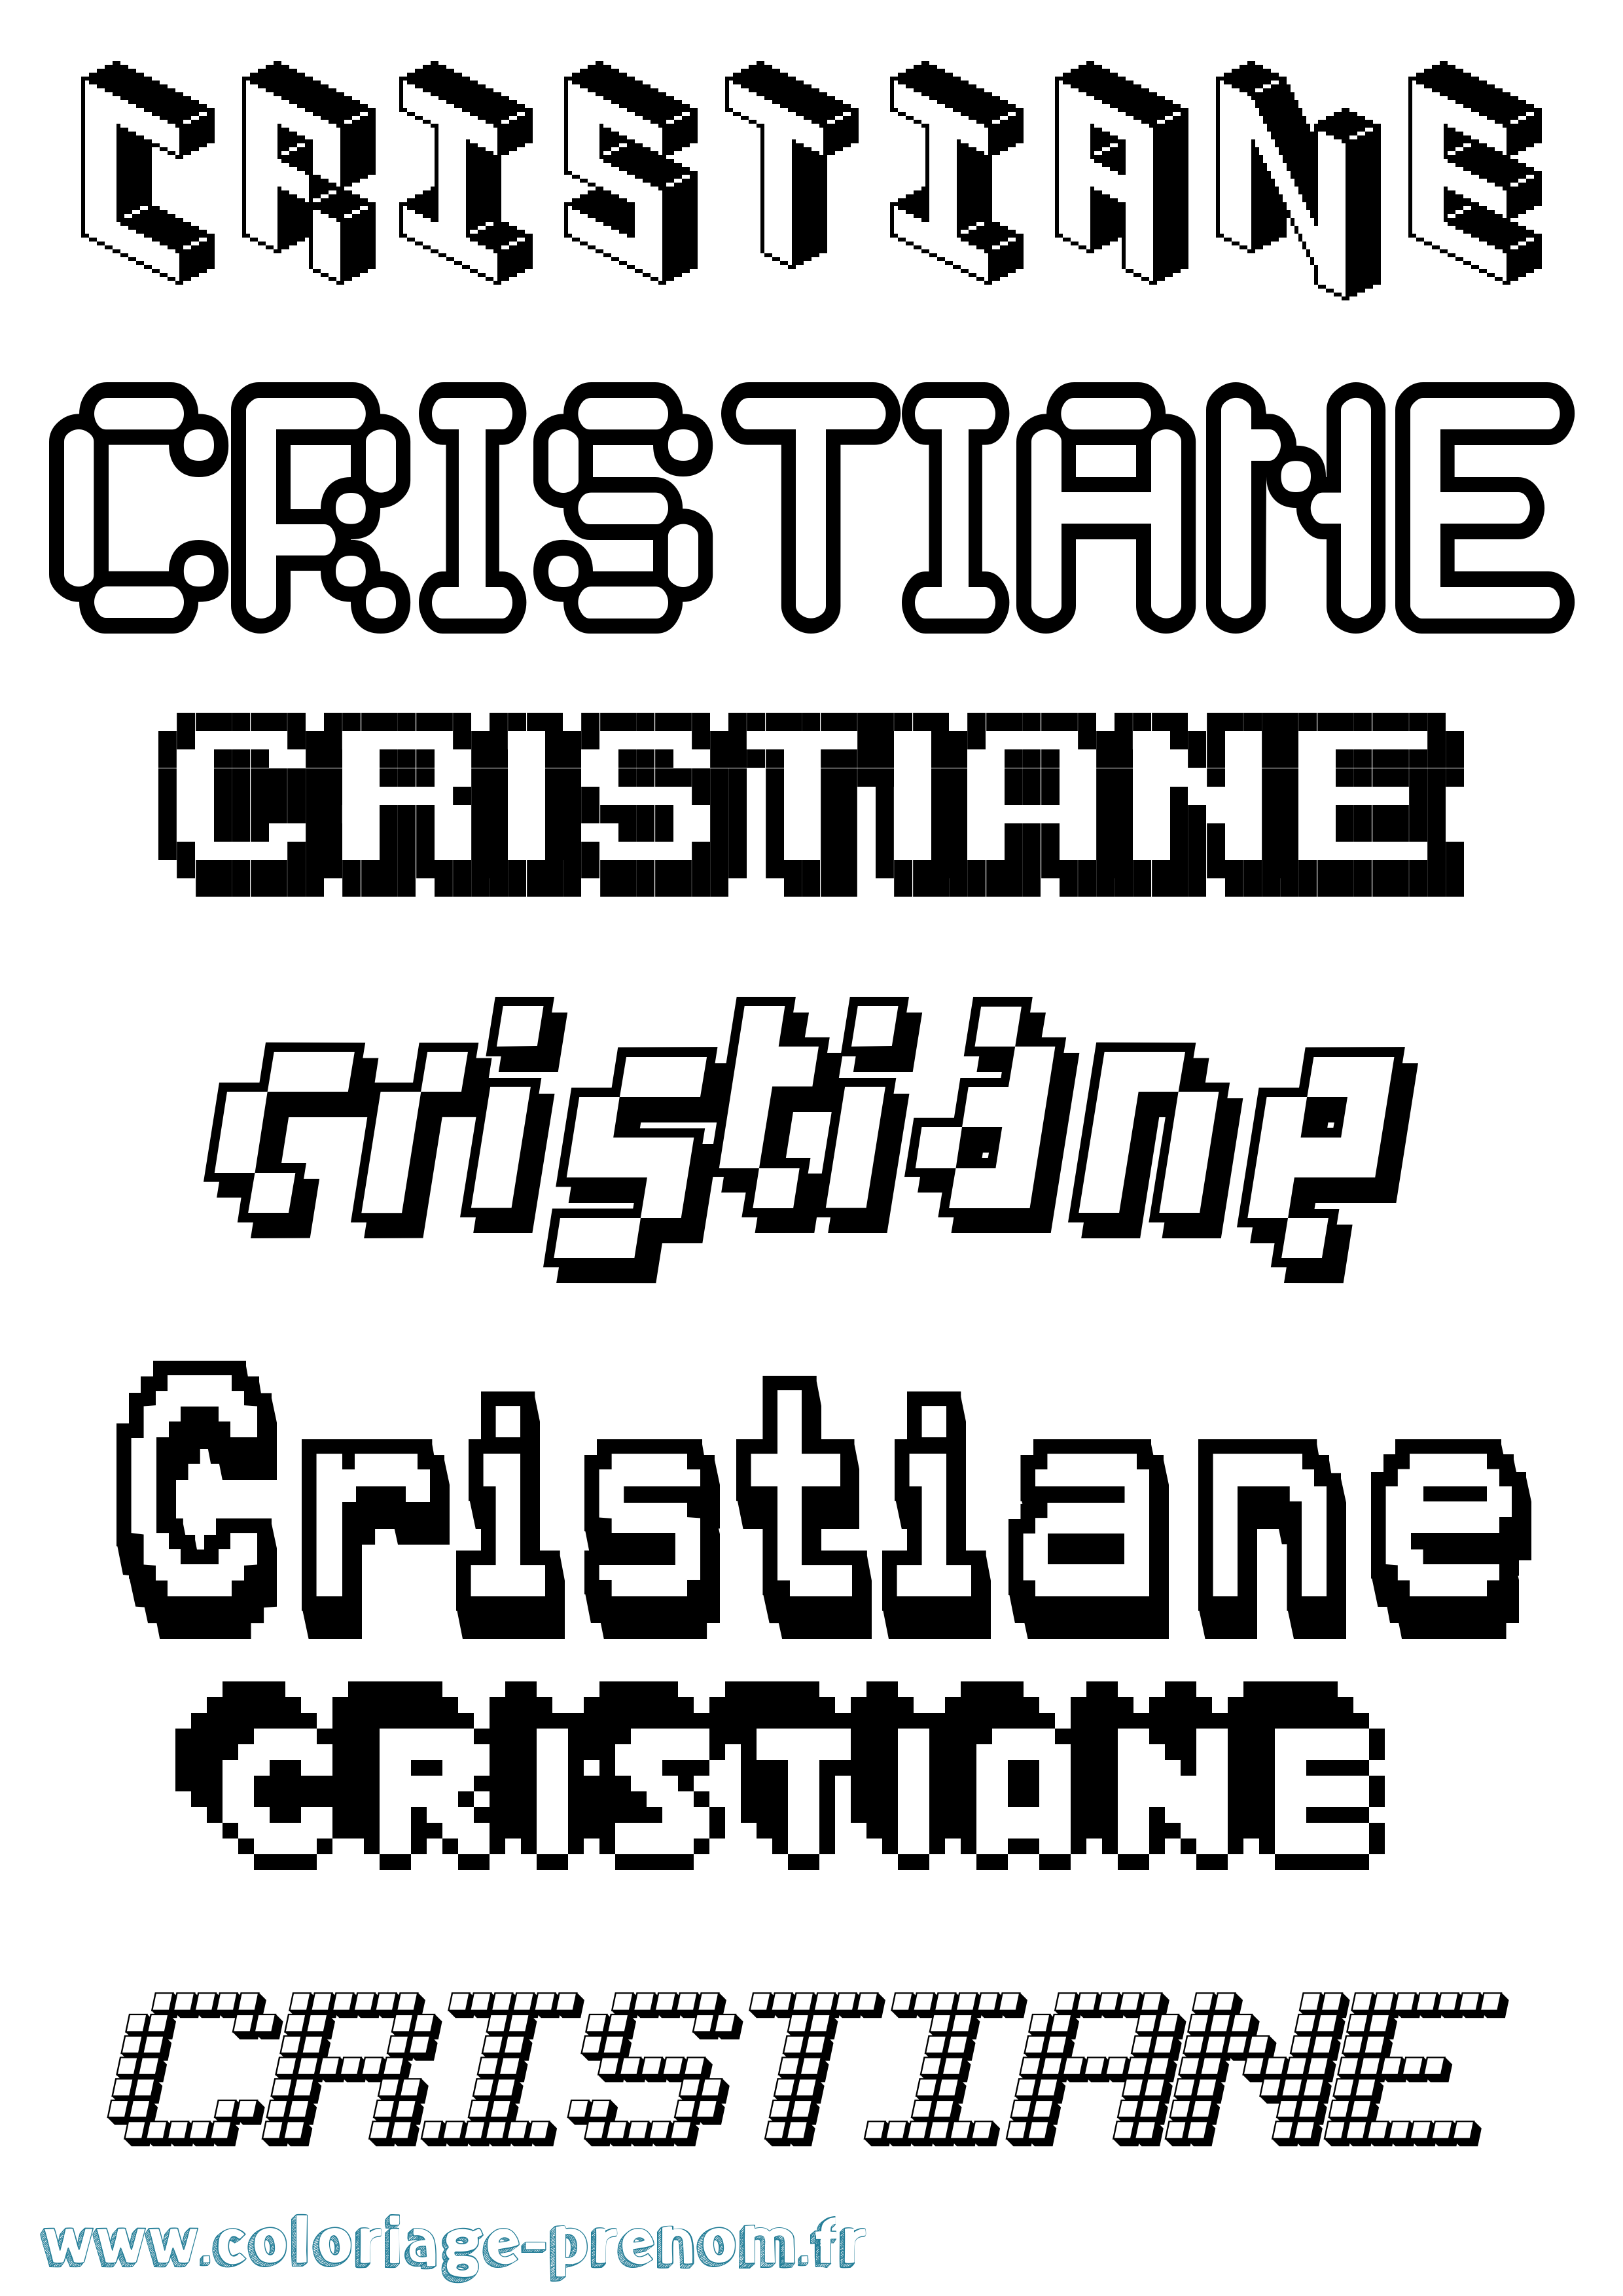 Coloriage prénom Cristiane Pixel